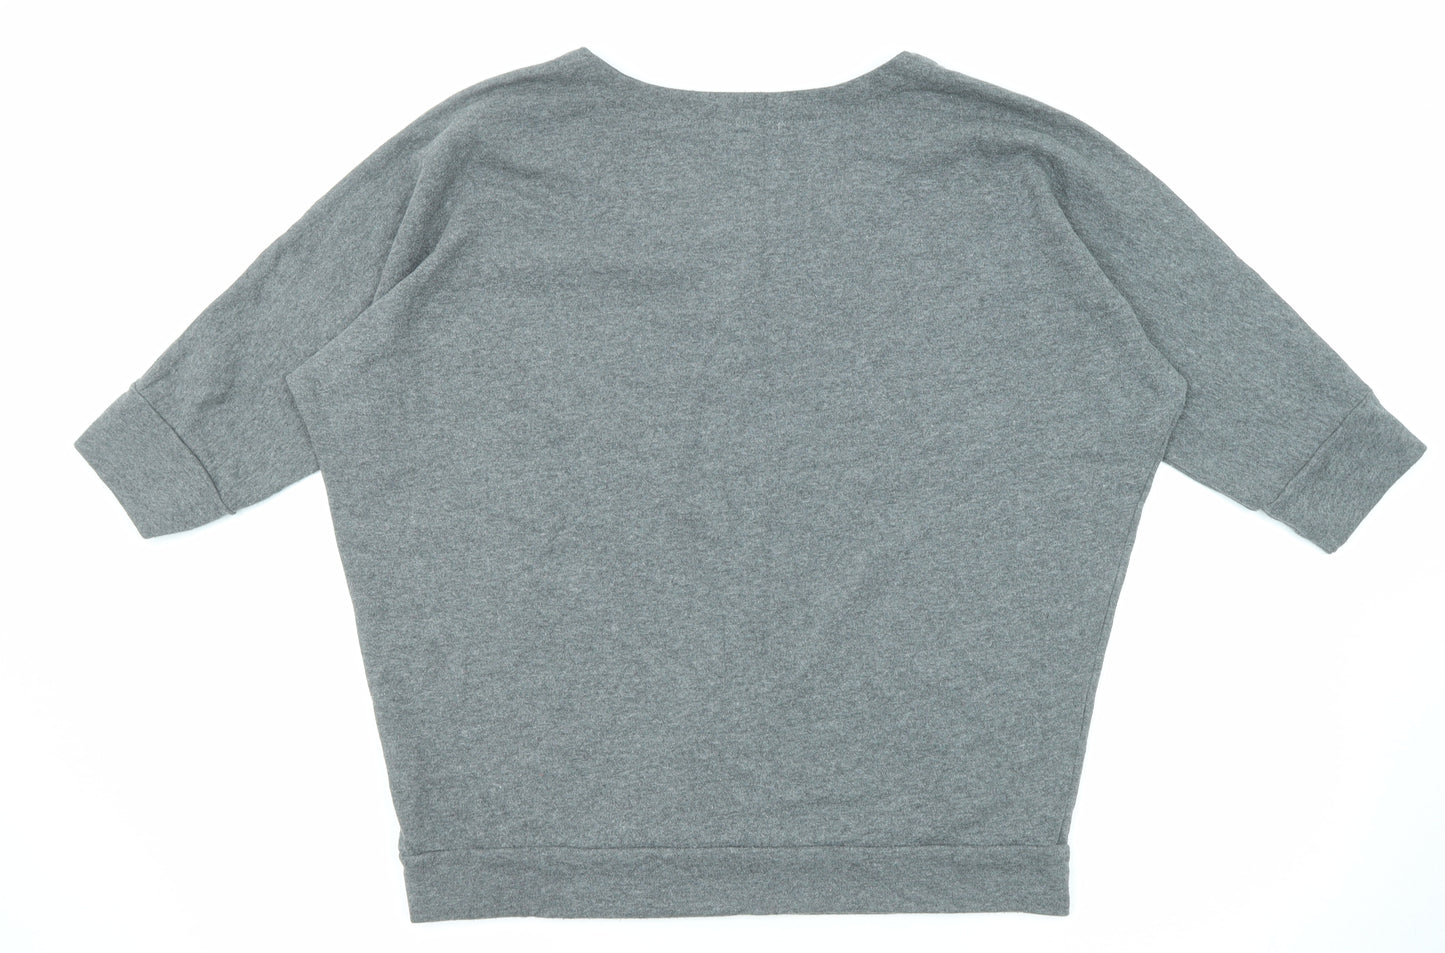 Gap Womens Grey Cotton Pullover Sweatshirt Size S Pullover